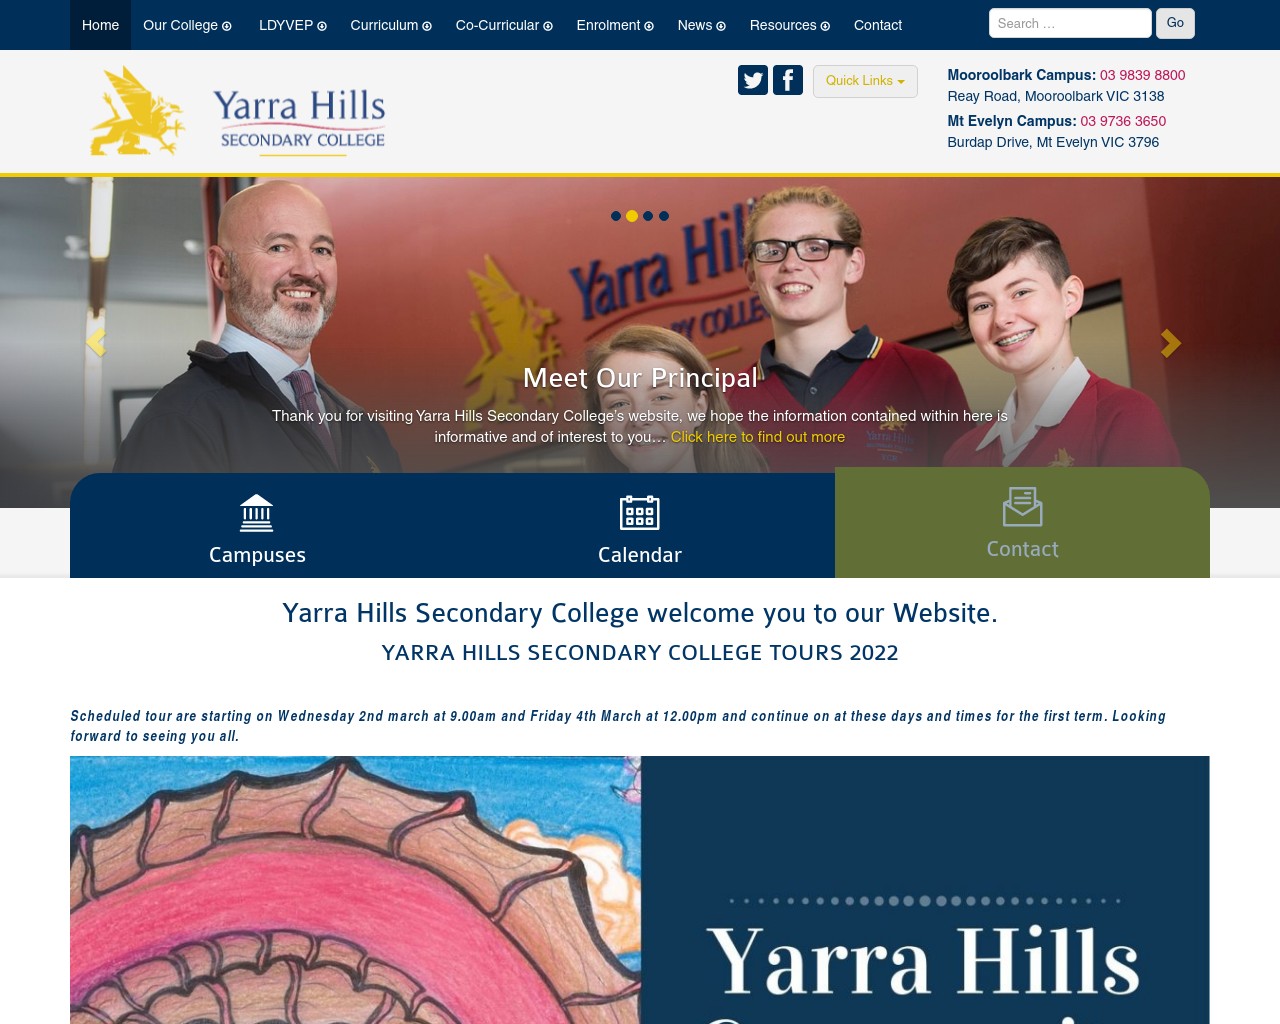 Yarra Hills Secondary College